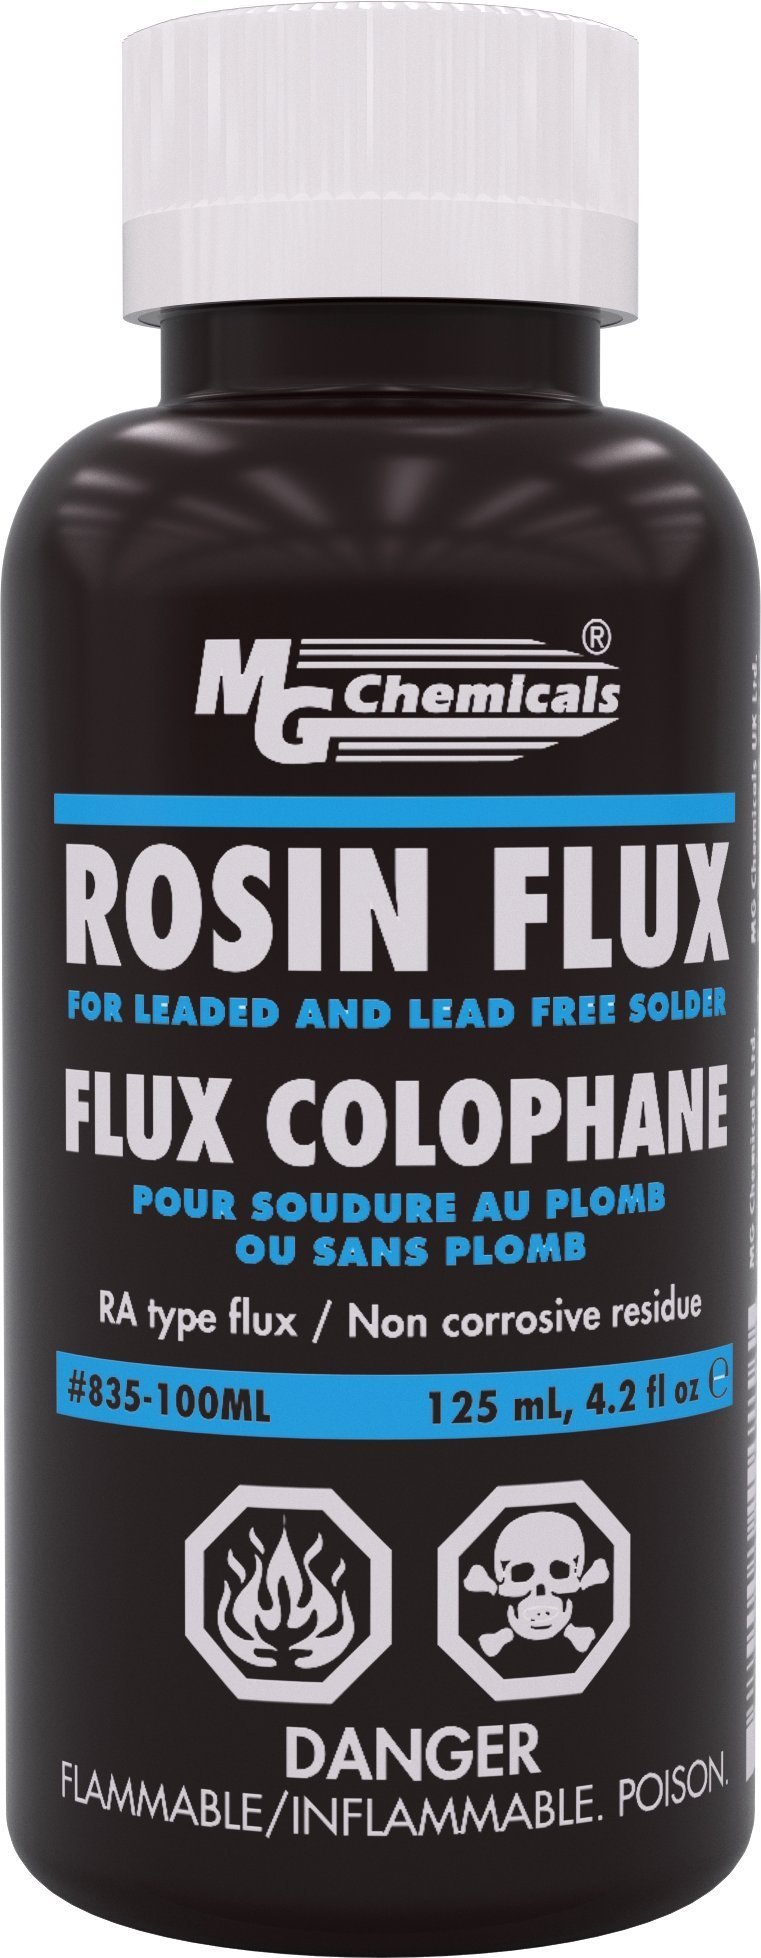 MG Chemicals - 835-100ML Liquid Rosin Flux, for Leaded and Lead Free Solder, 125 ml Bottle 125mL - NewNest Australia